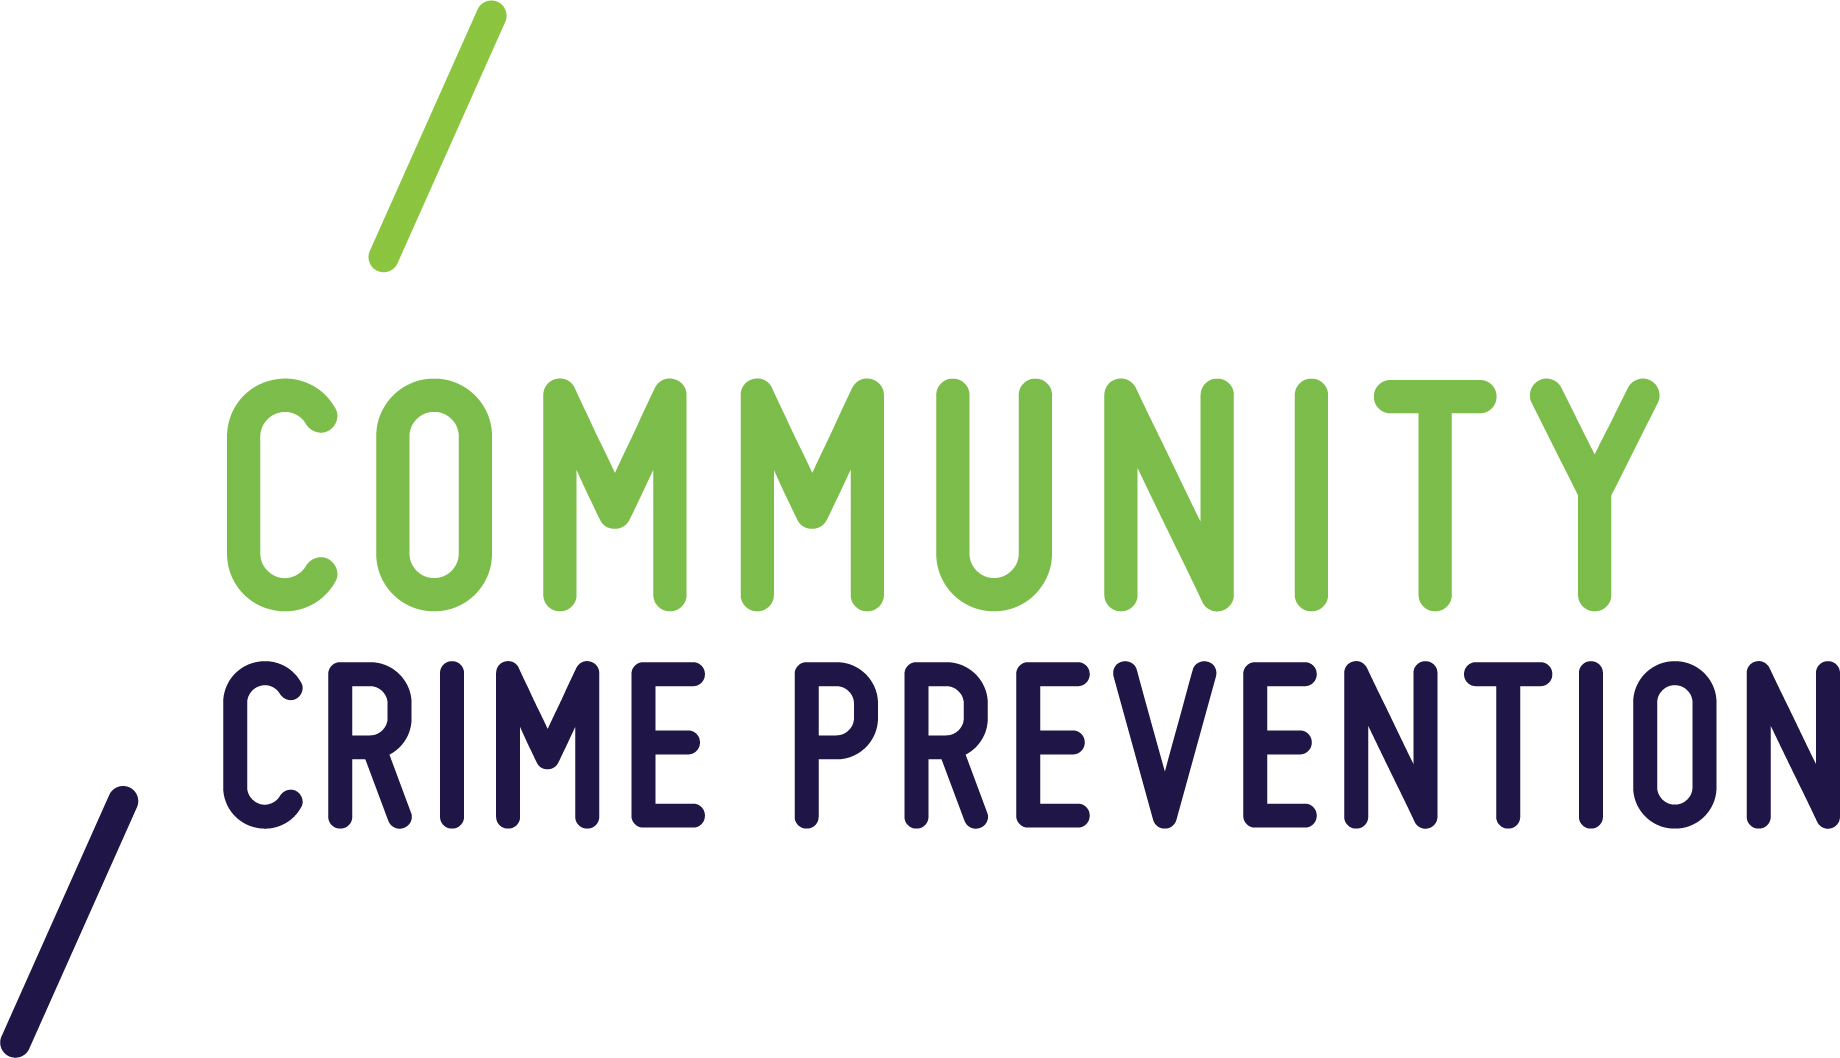 Community Crime Prevention